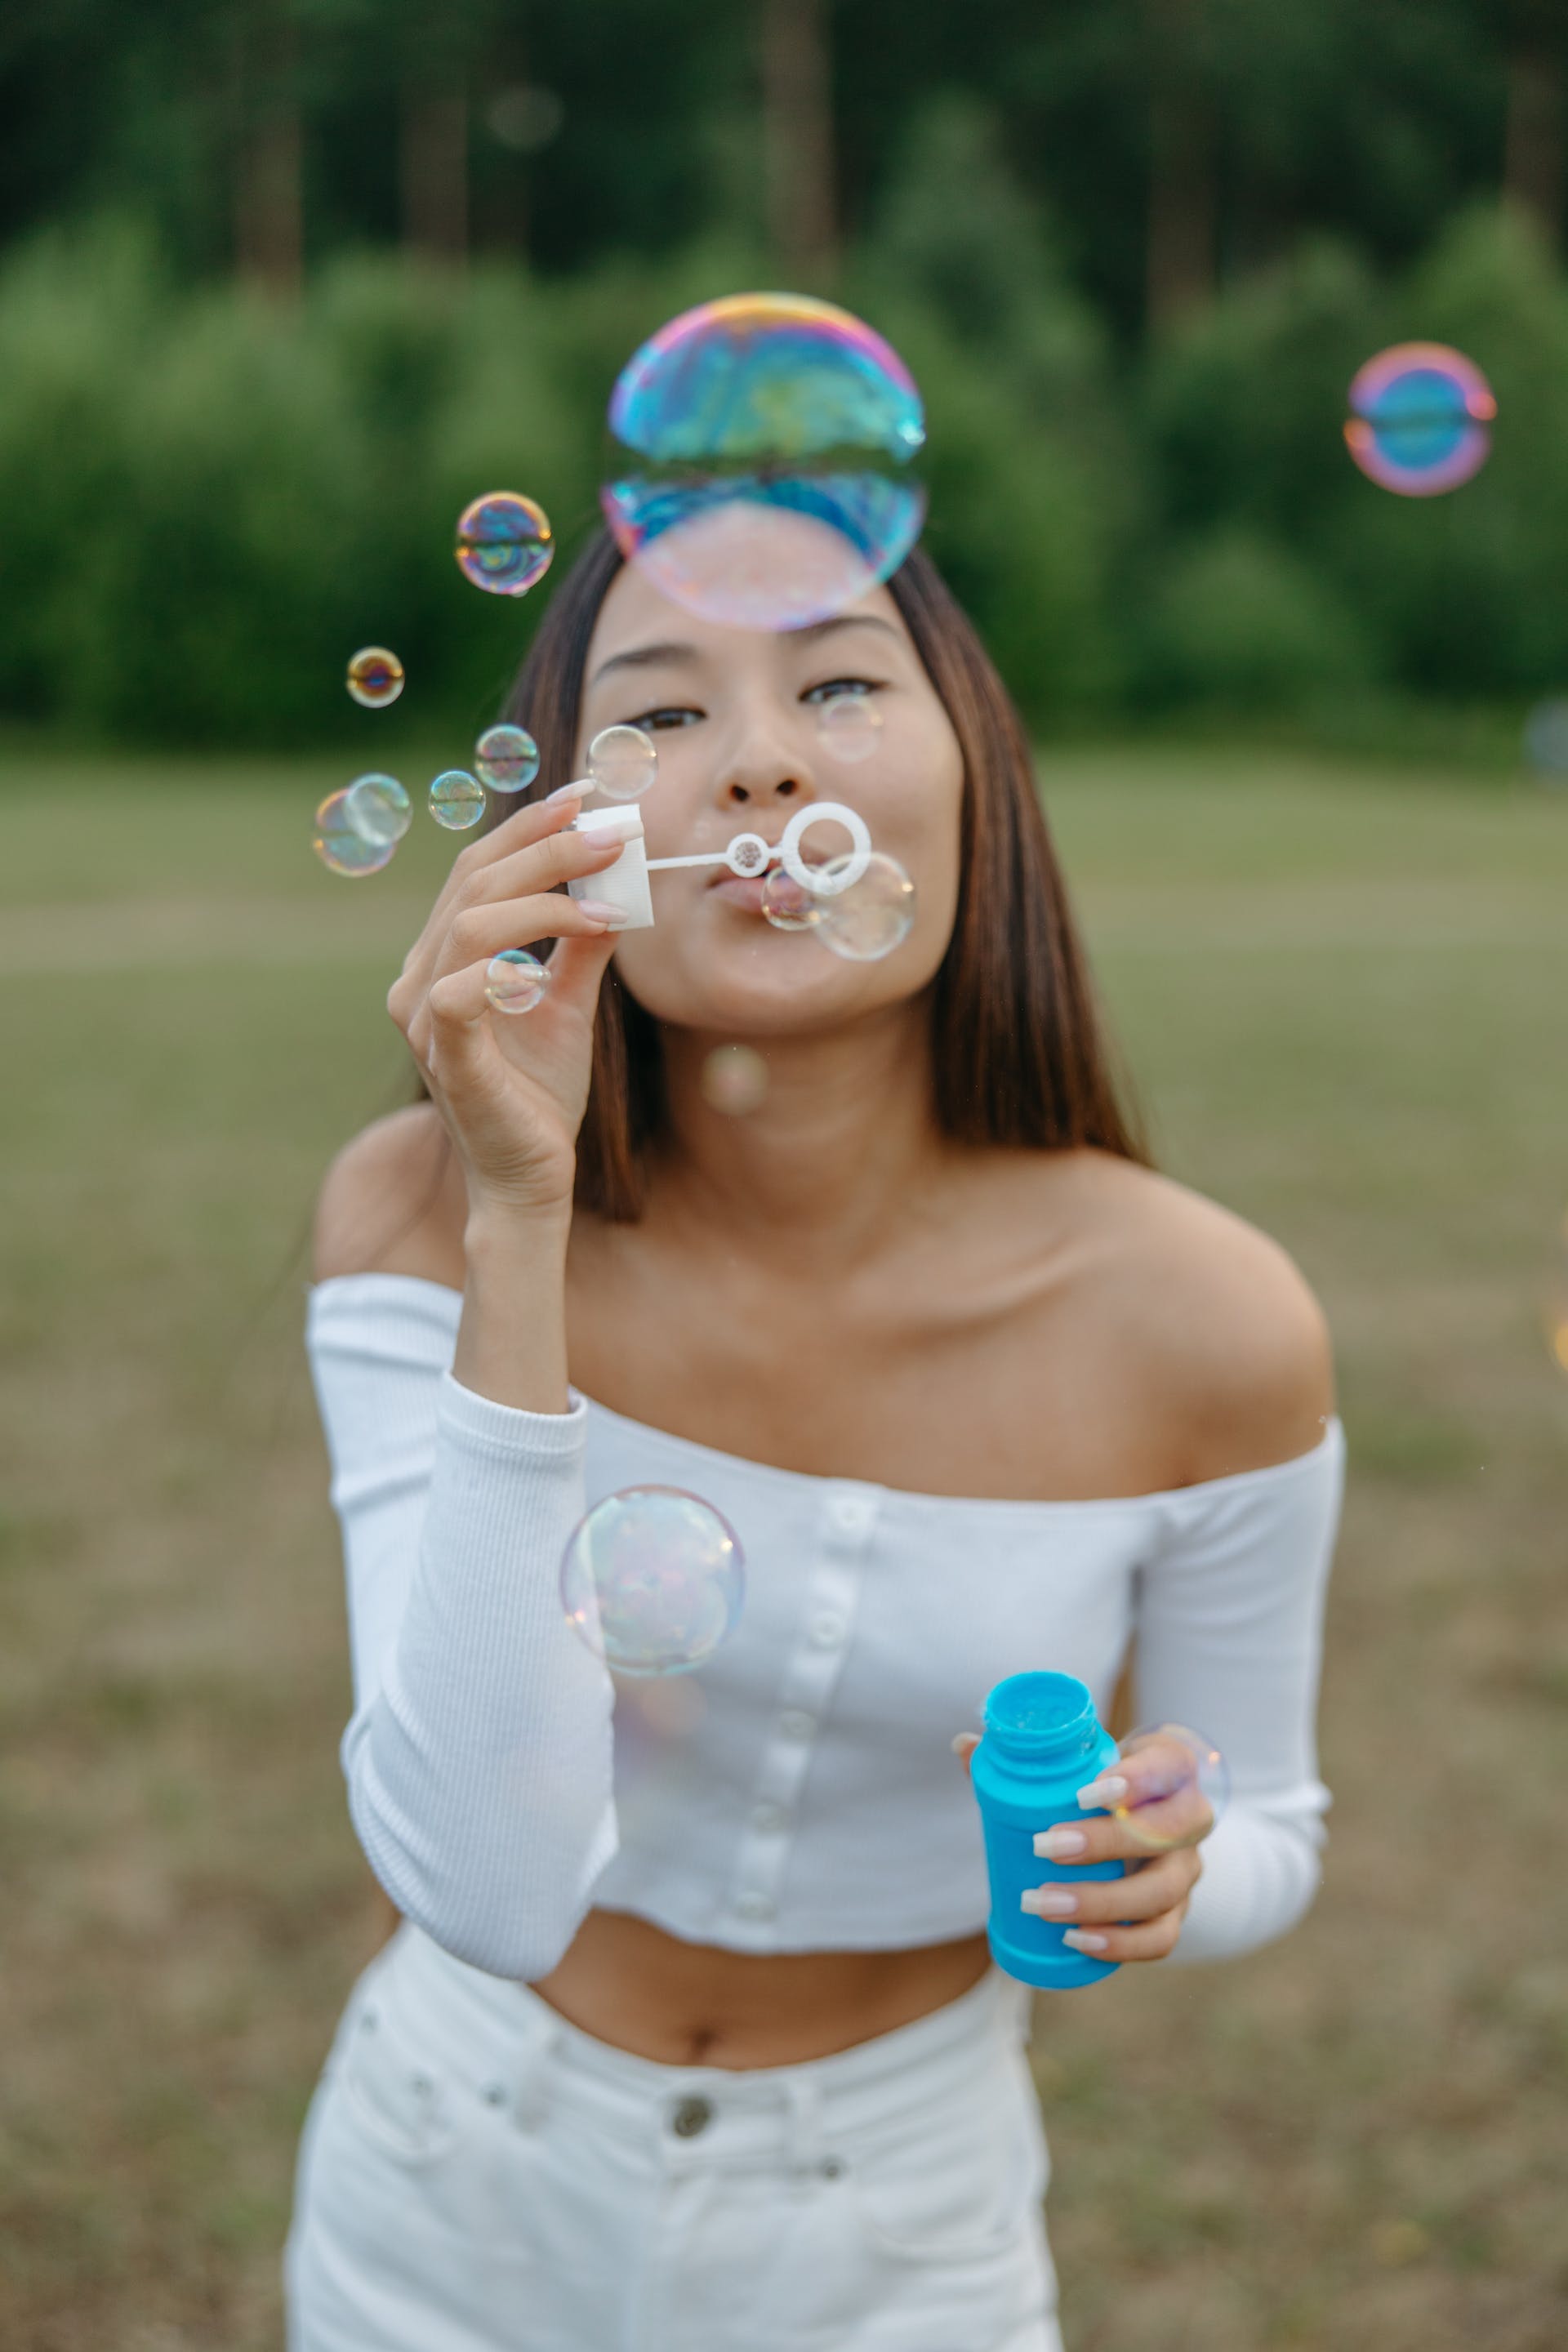 A woman blowing bubbles | Source: Pexels